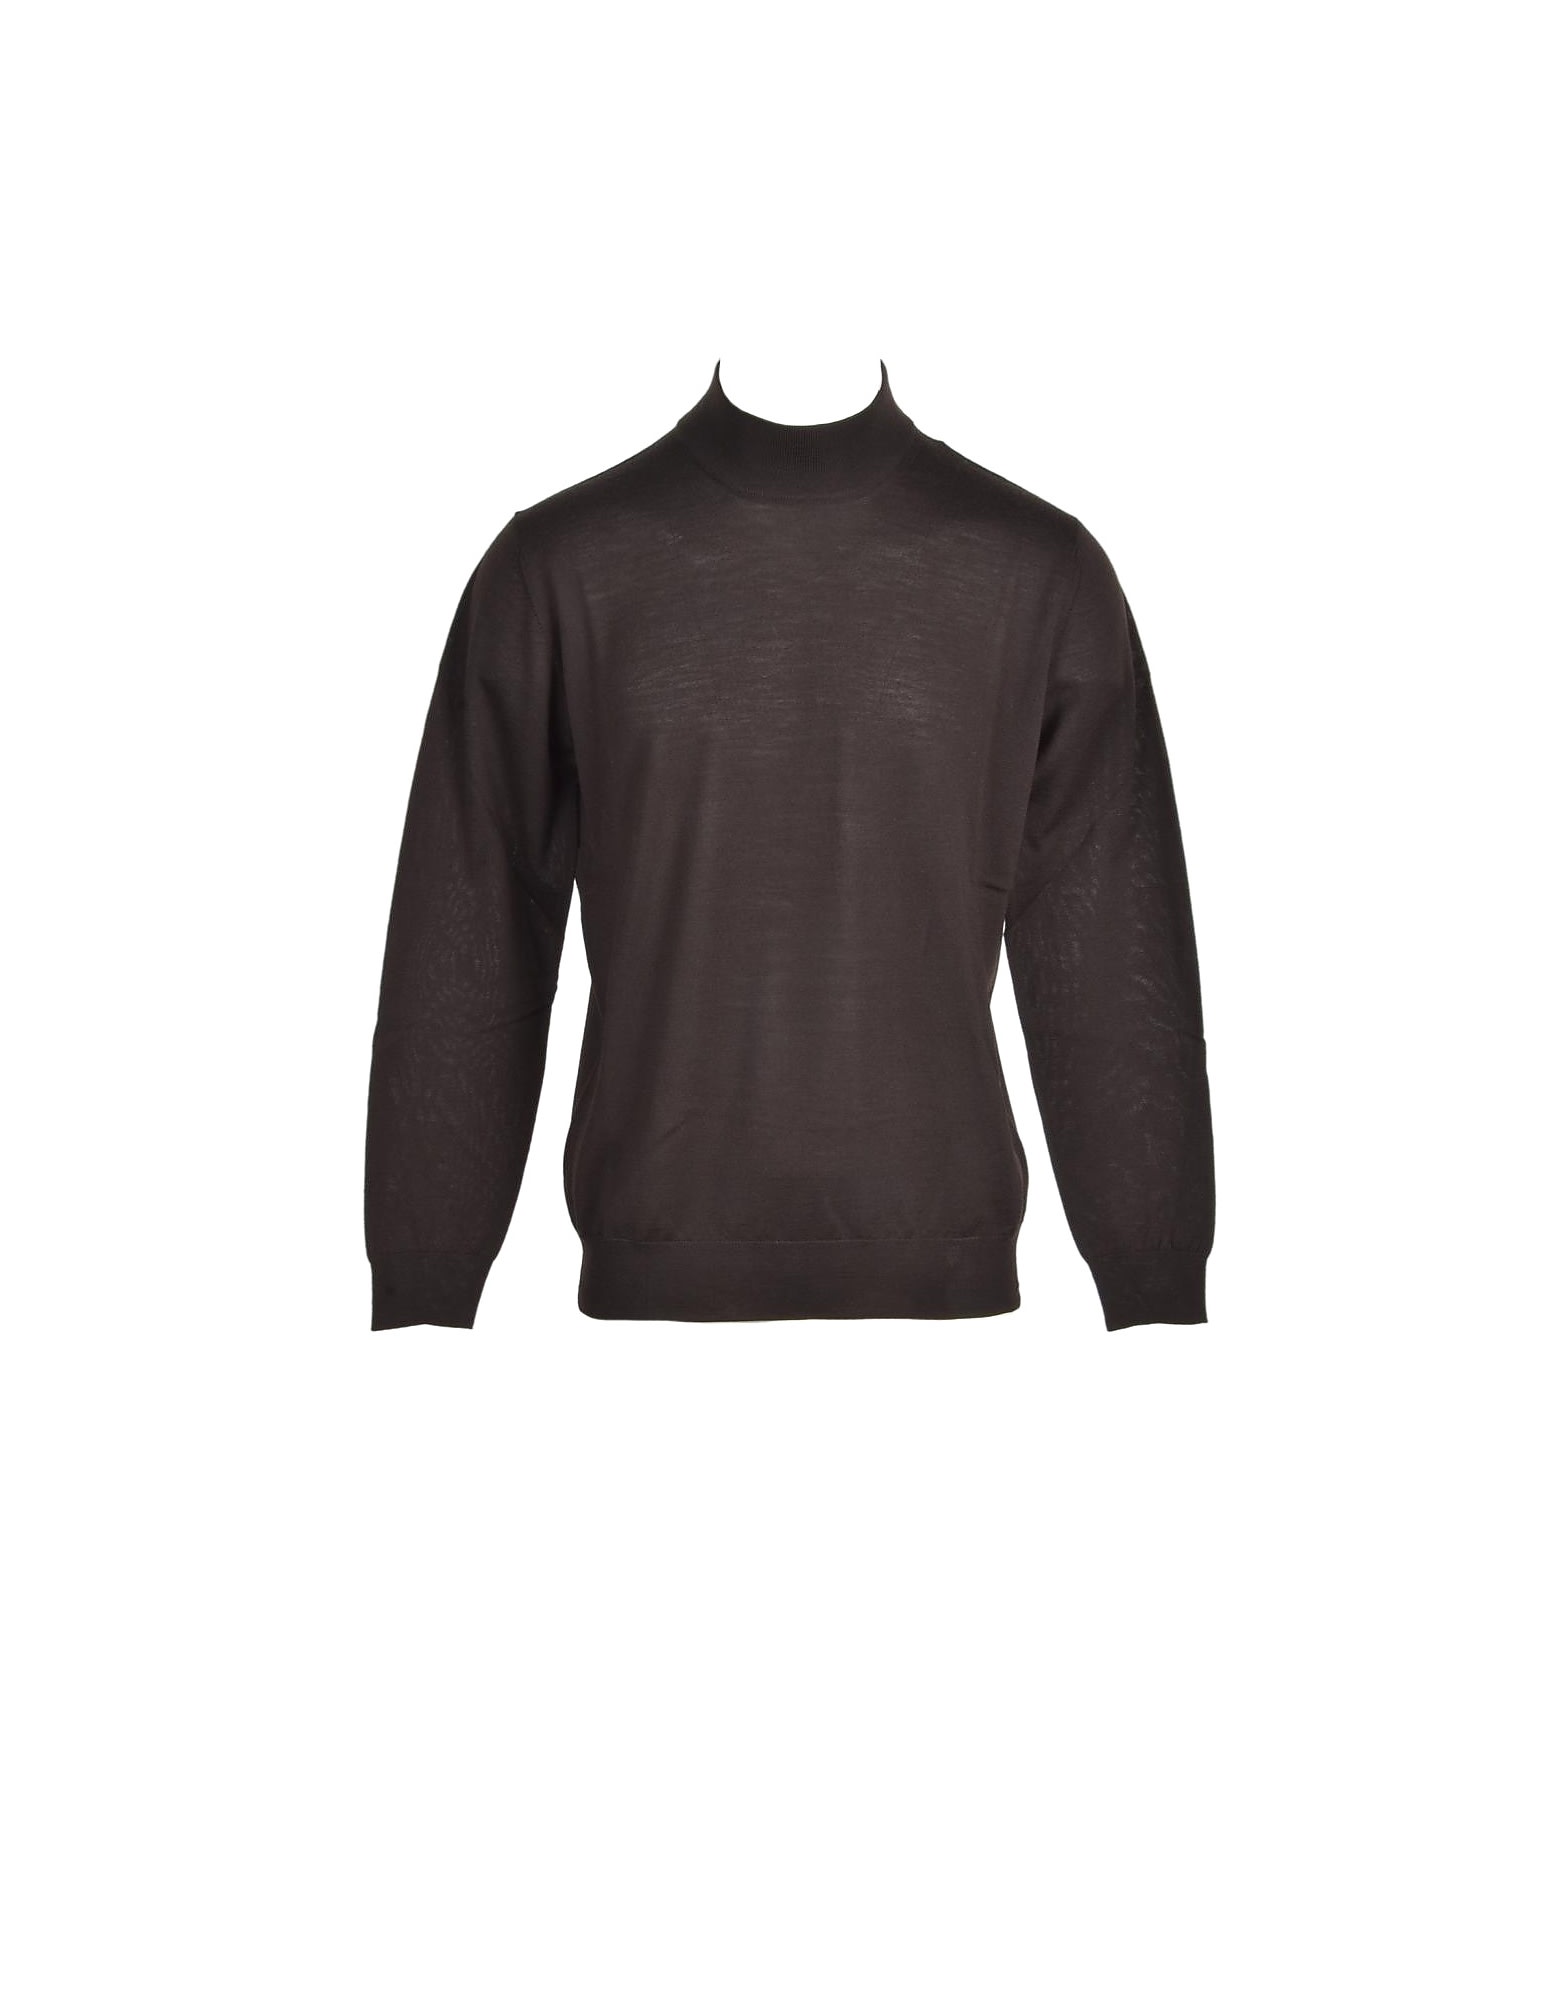 Altea Mens Dark Brown Sweater